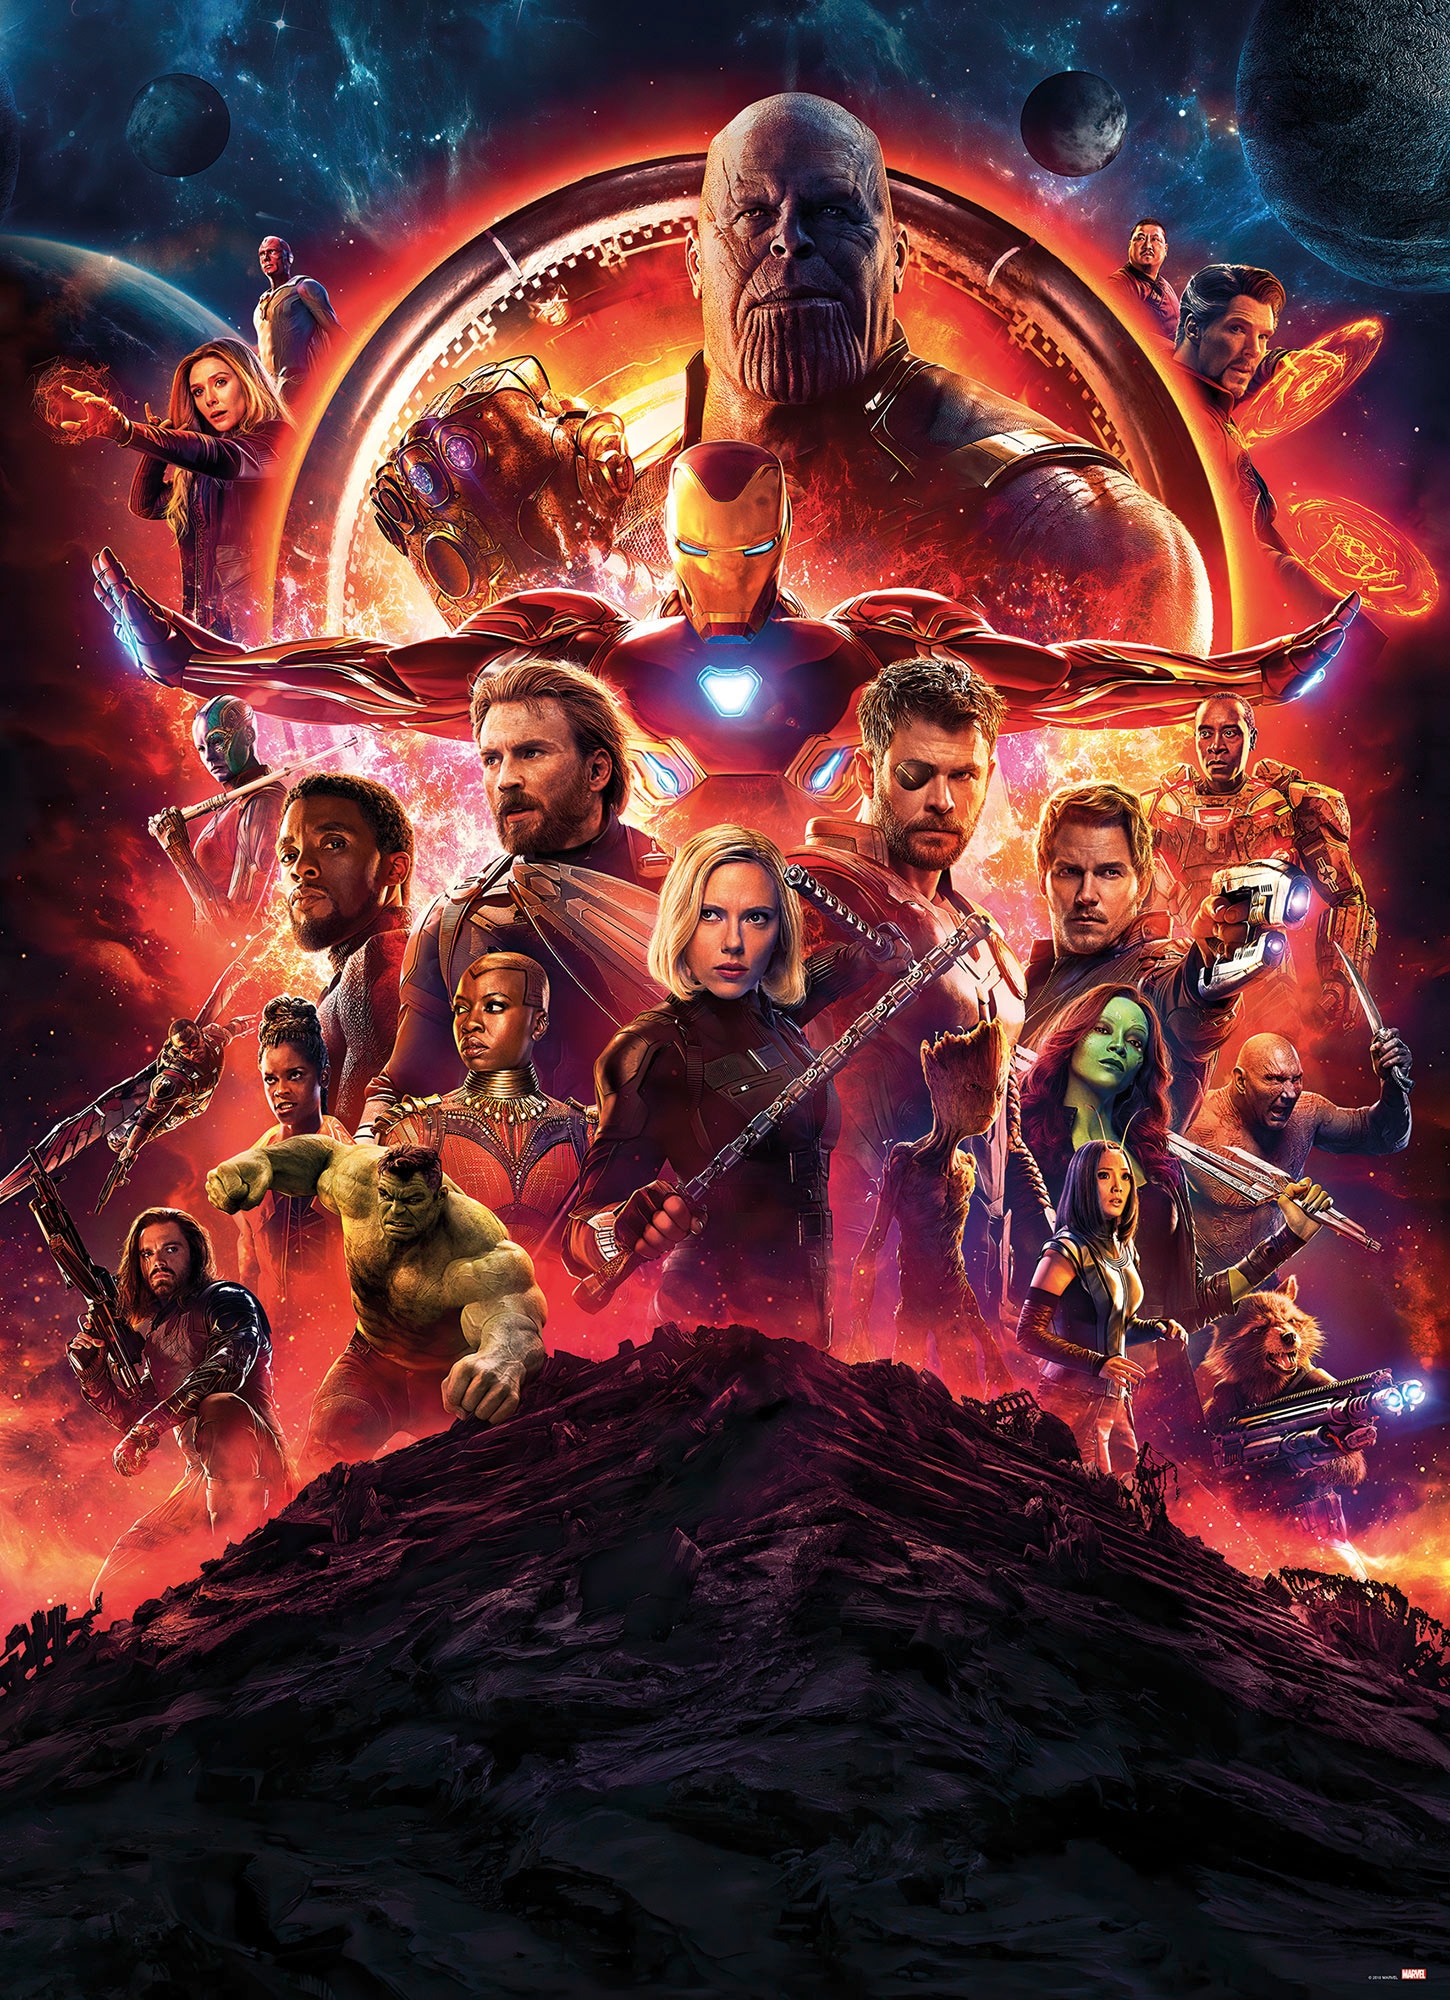 Fototapete »Avengers Infinity War Movie Poster«, 184x254 cm (Breite x Höhe), inklusive...